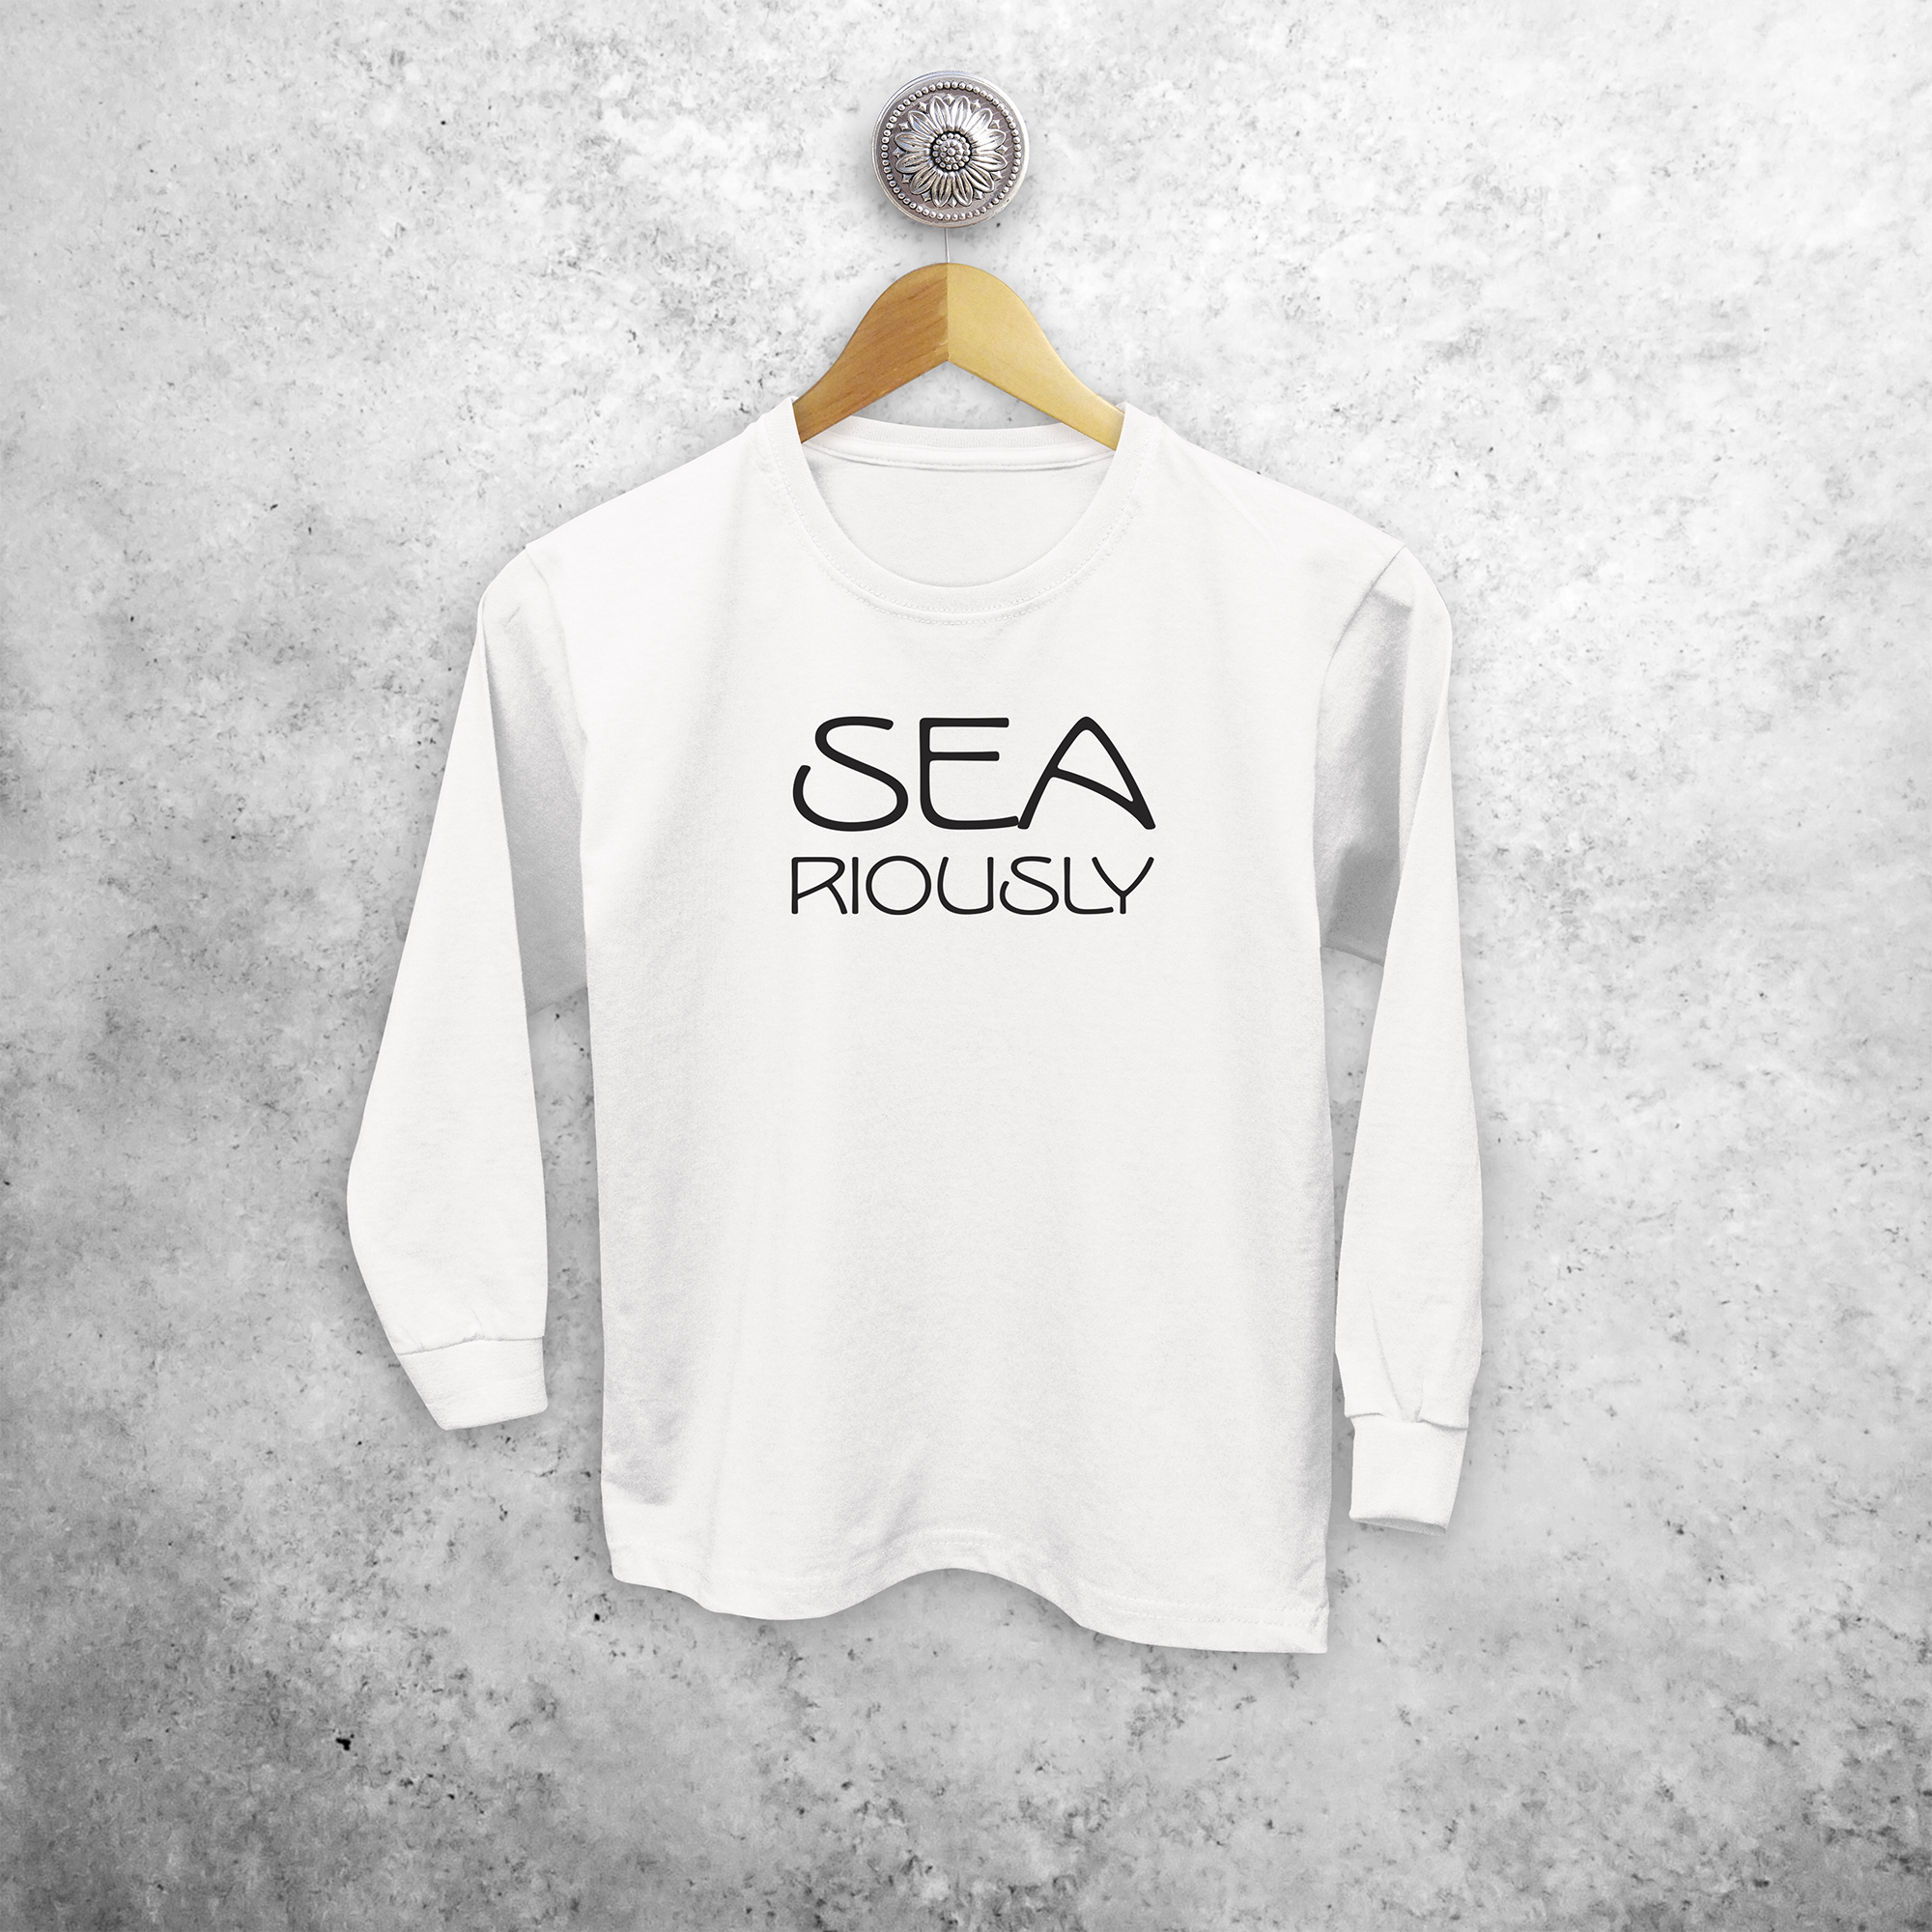 'Sea-riously' kids longsleeve shirt